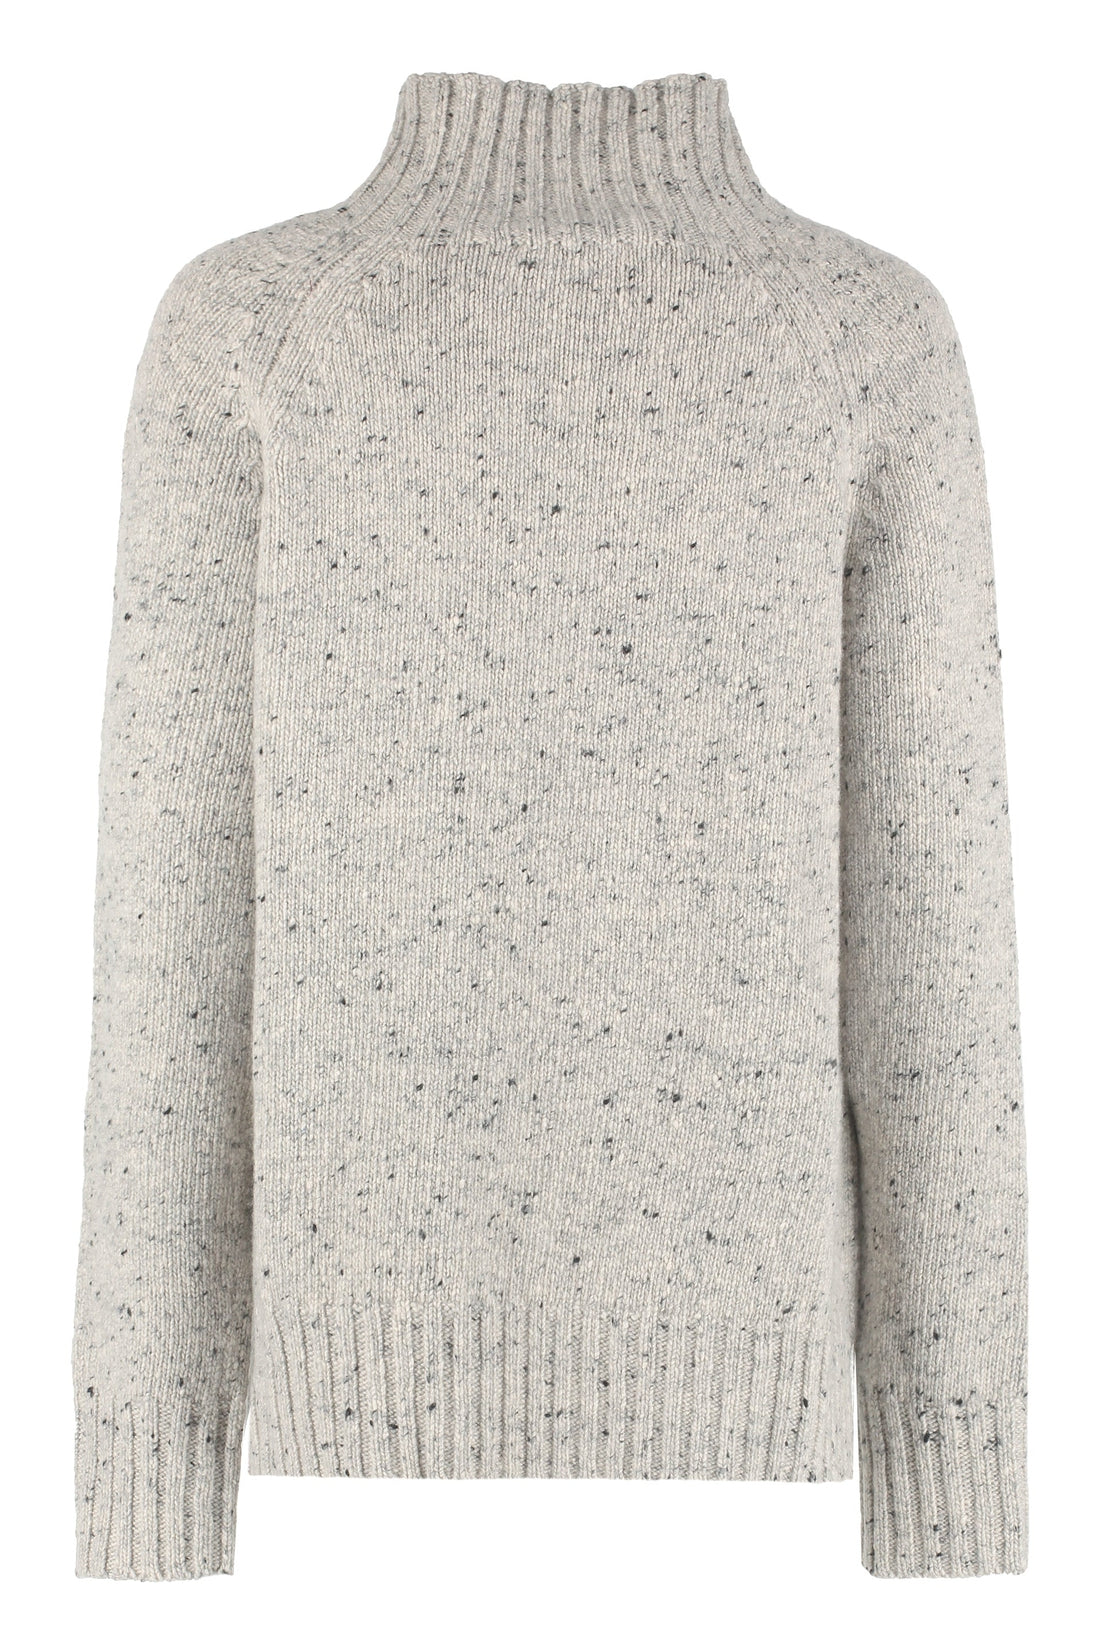 S MAX MARA-OUTLET-SALE-Gioele turtleneck sweater-ARCHIVIST